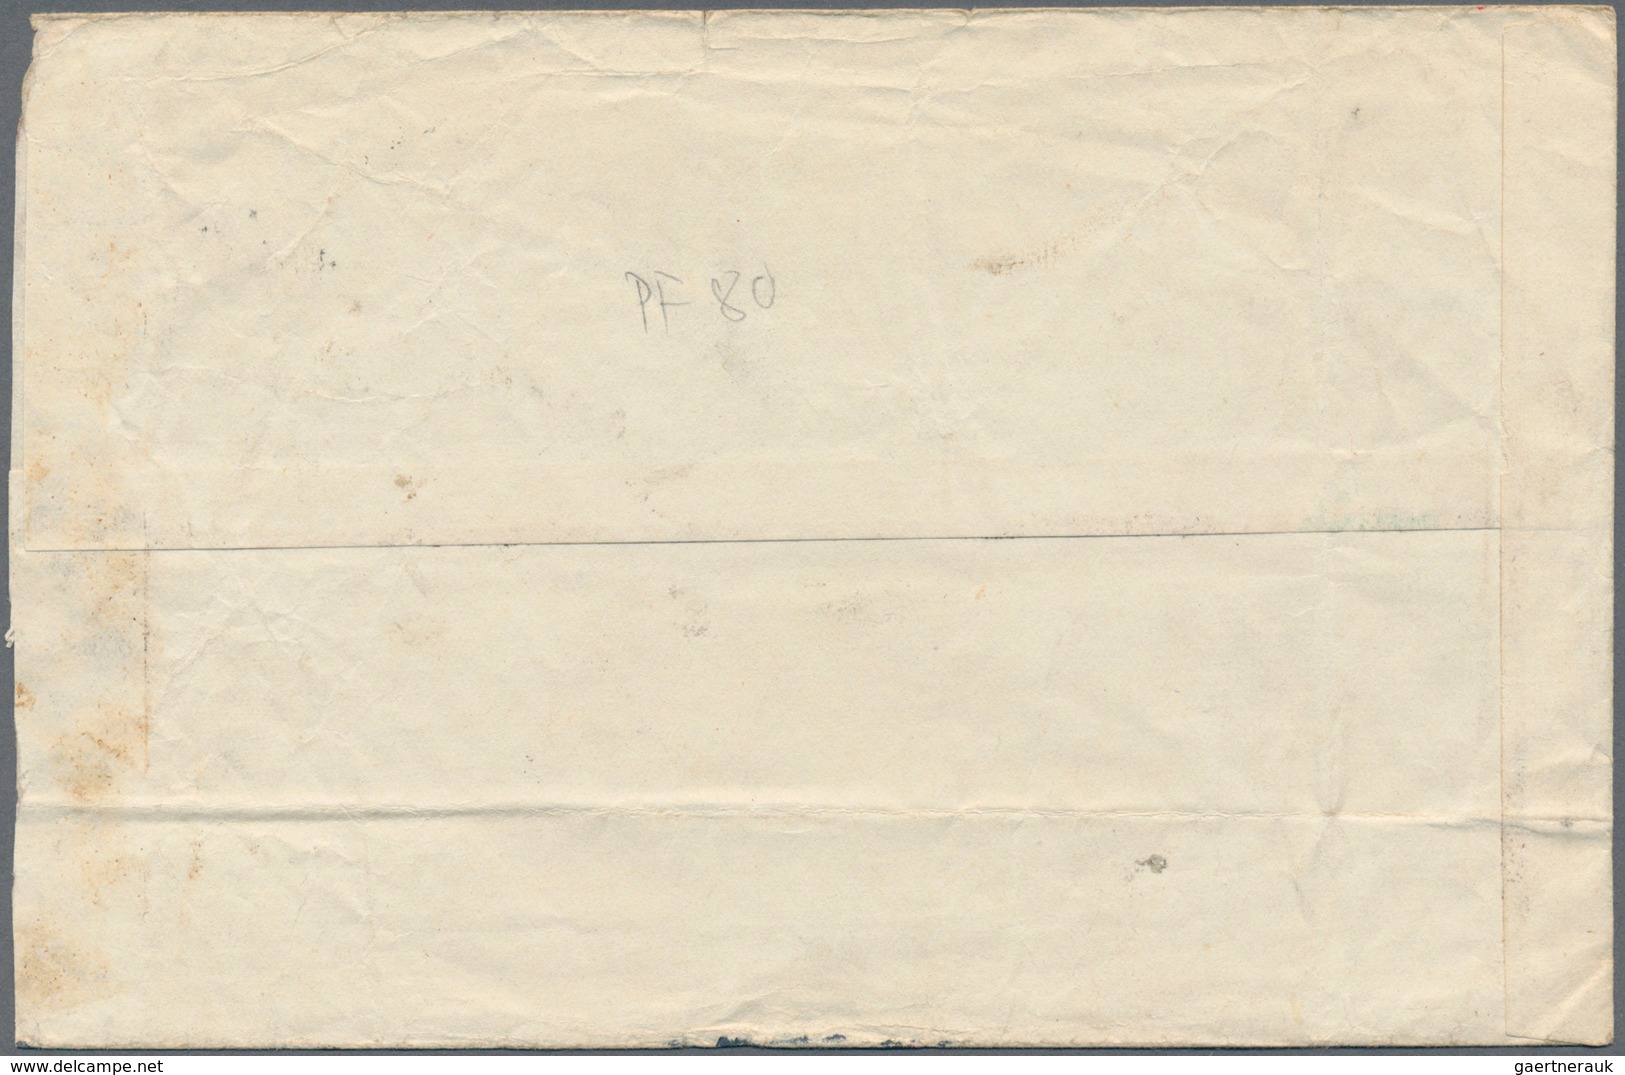 China - Volksrepublik - Ganzsachen: 1970/73, "paper Cut" Envelope 8 F. Carmine Canc. Clear "Kwangsi - Postcards